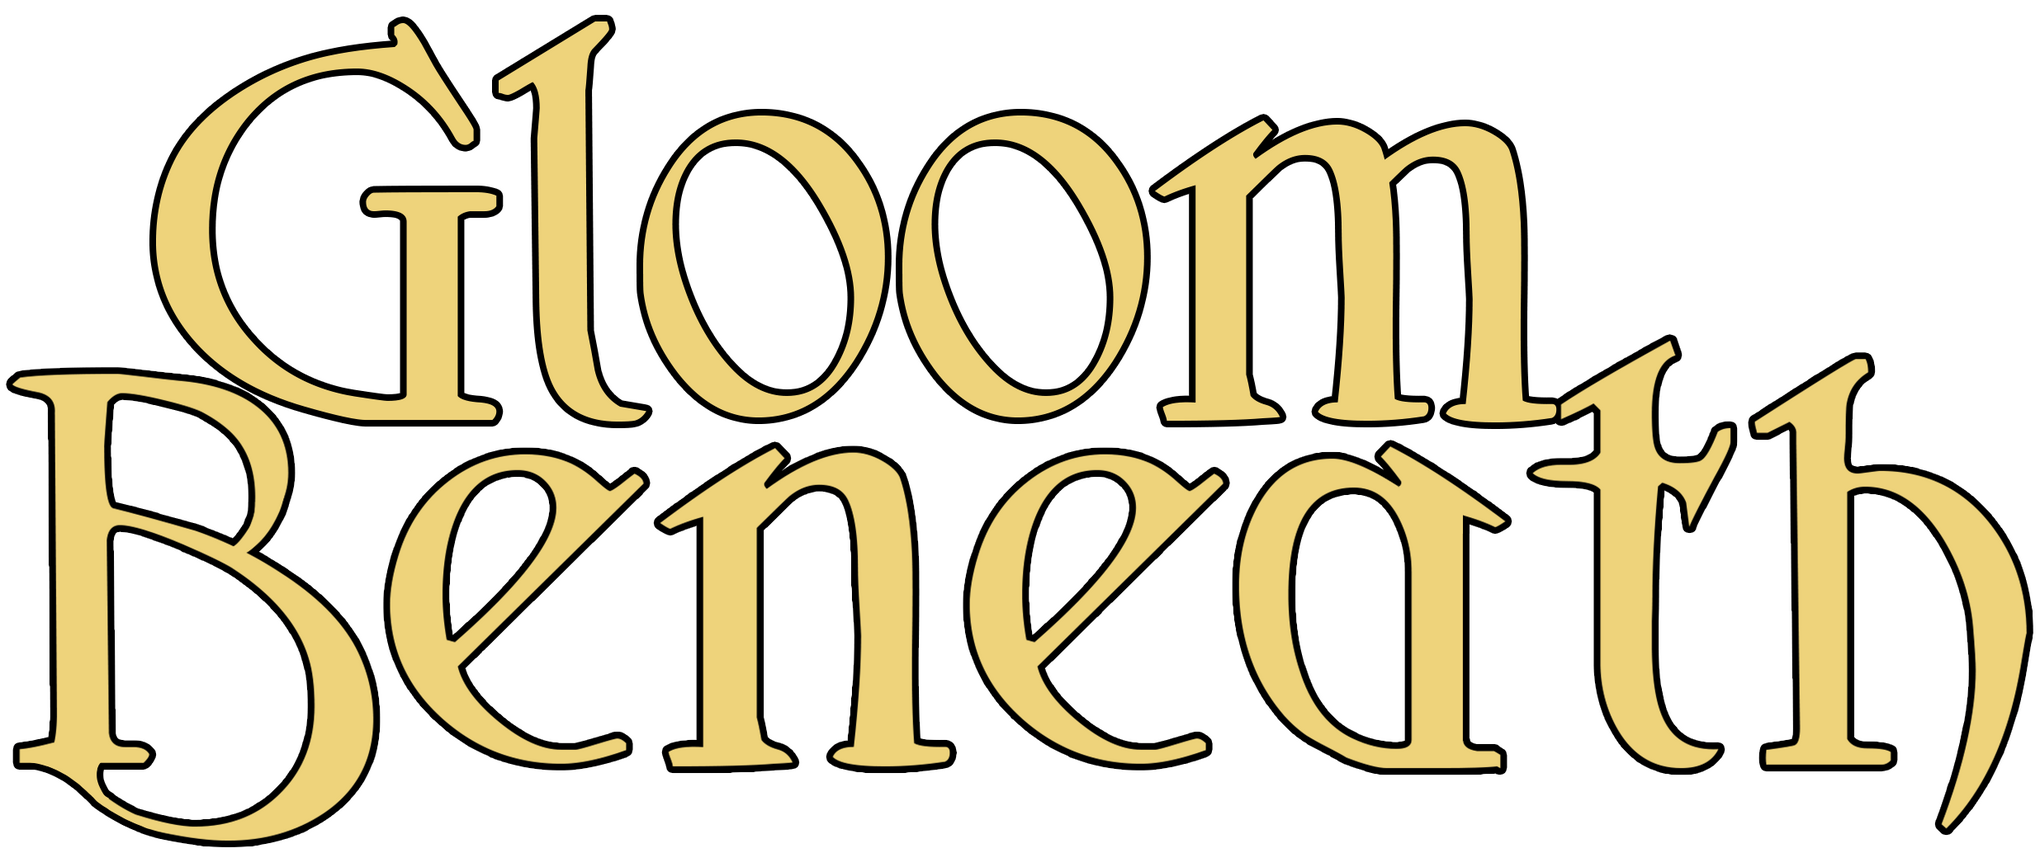 Gloom Beneath Logo